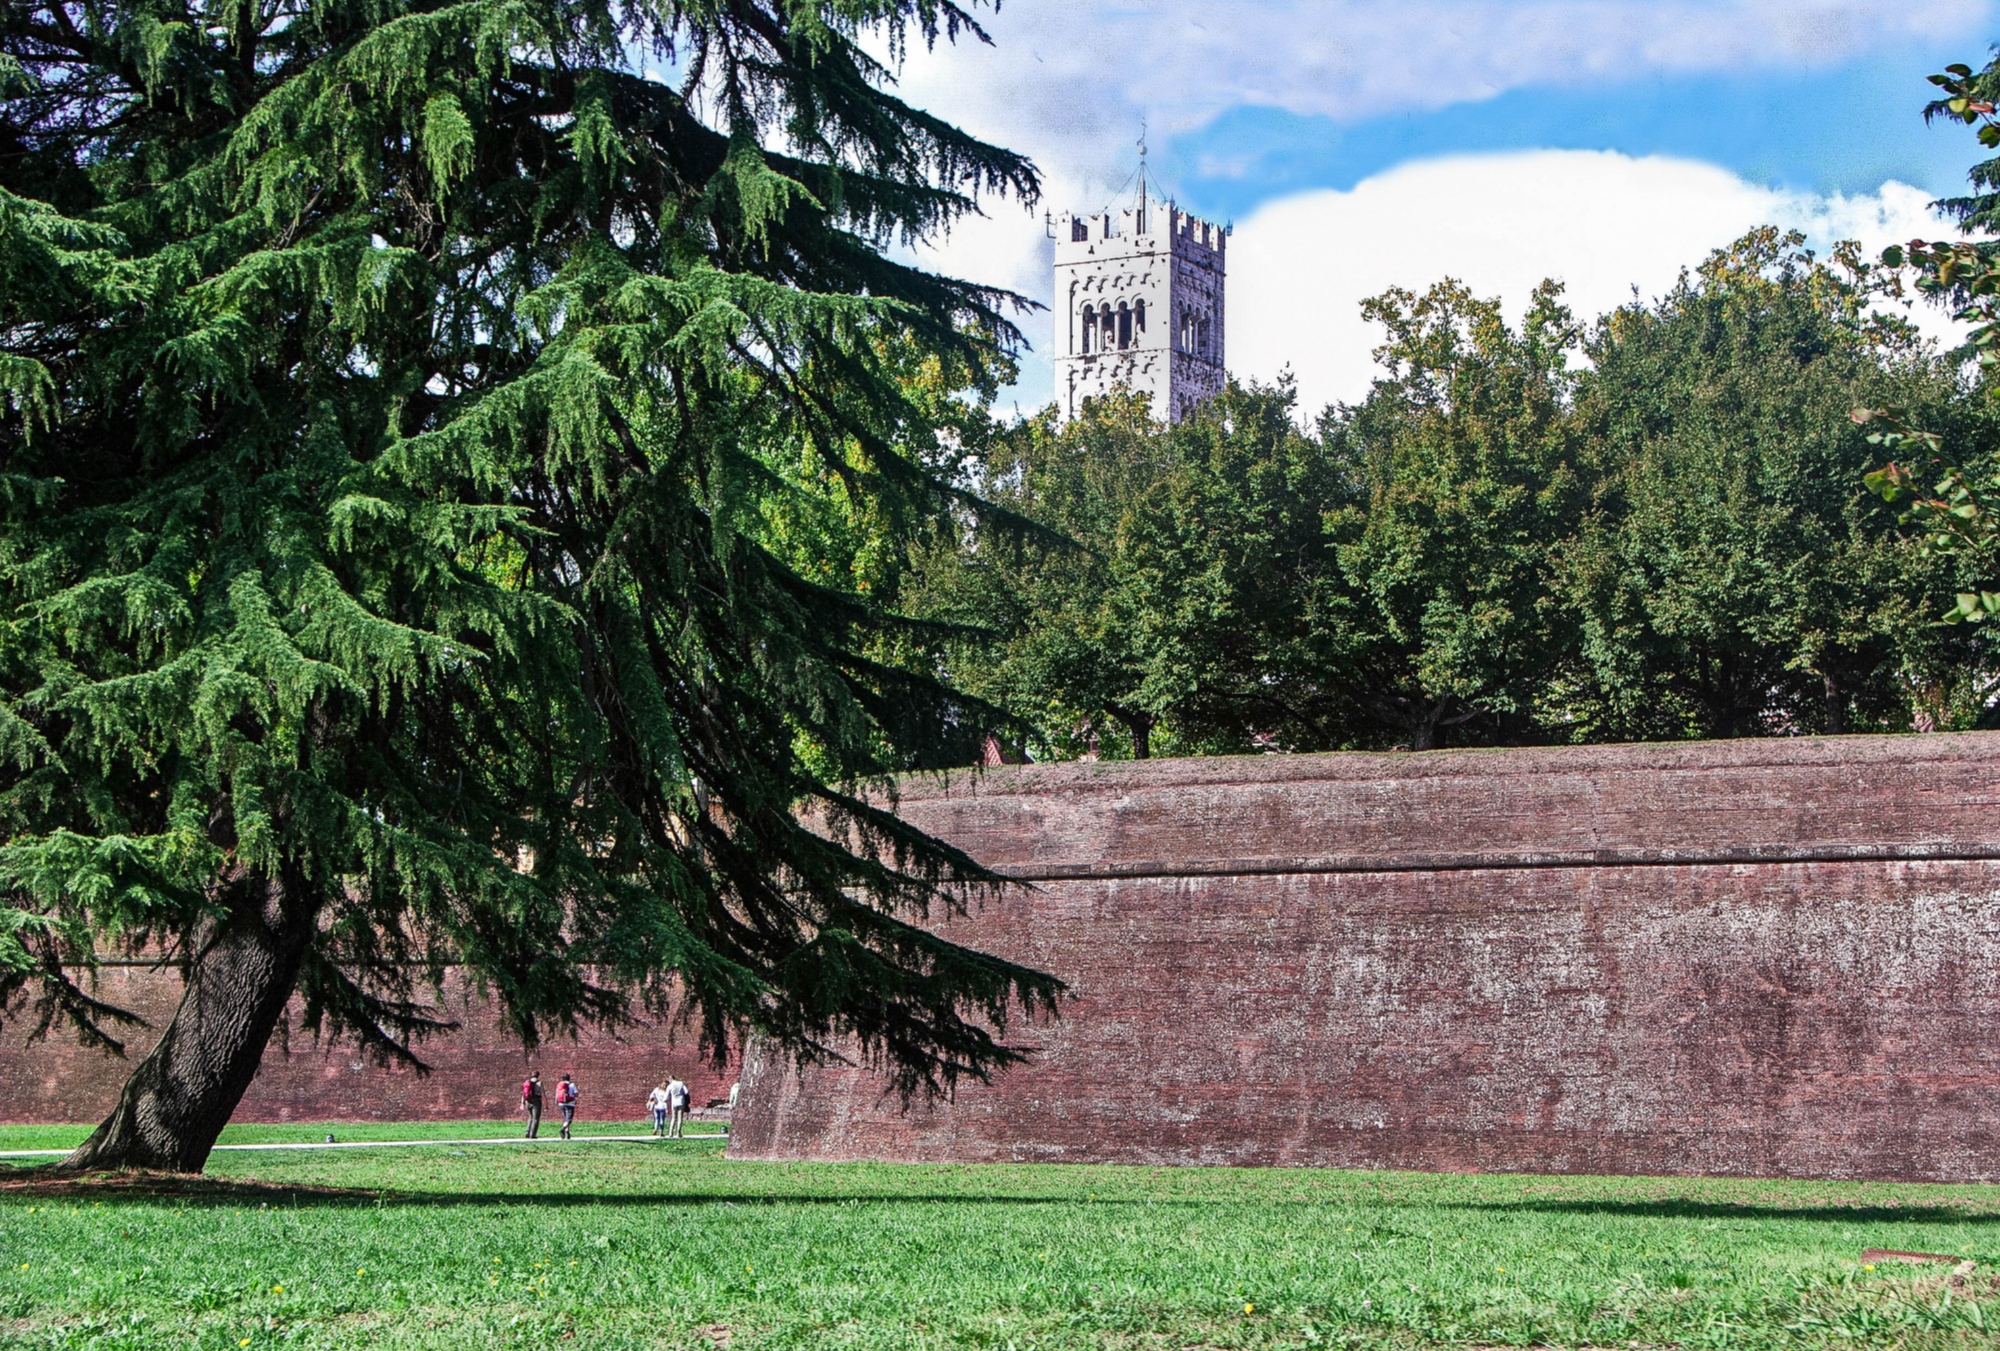 Lucca's walls